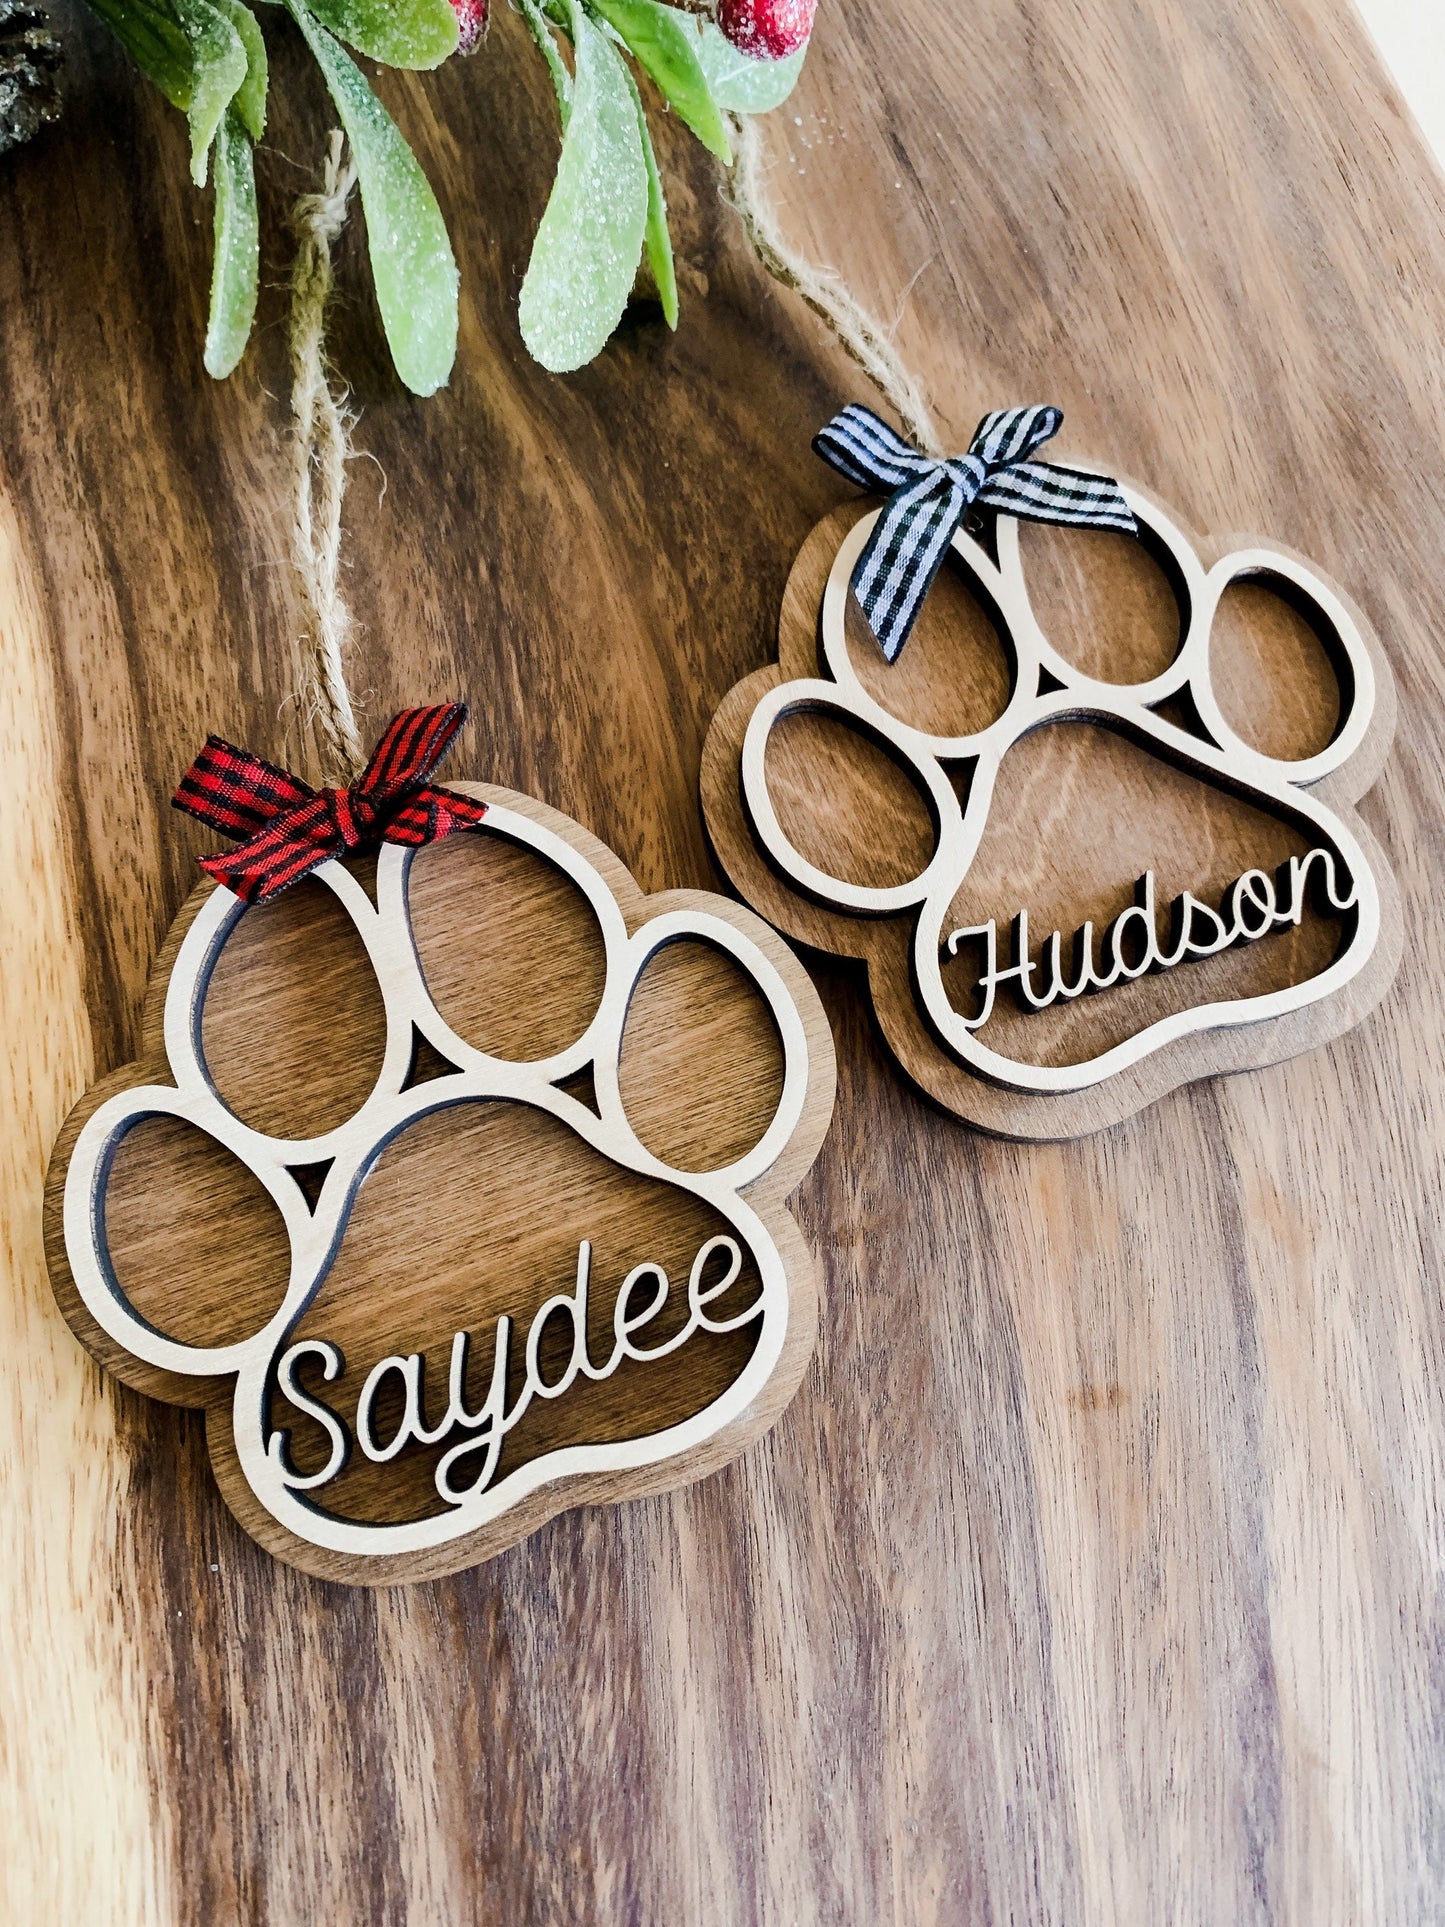 Dog Christmas Ornament, Paw Christmas Ornament, Custom Dog Ornament, Personalized Pet Ornament, Dog Ornament, Paw Ornament, Dog Paw Ornament